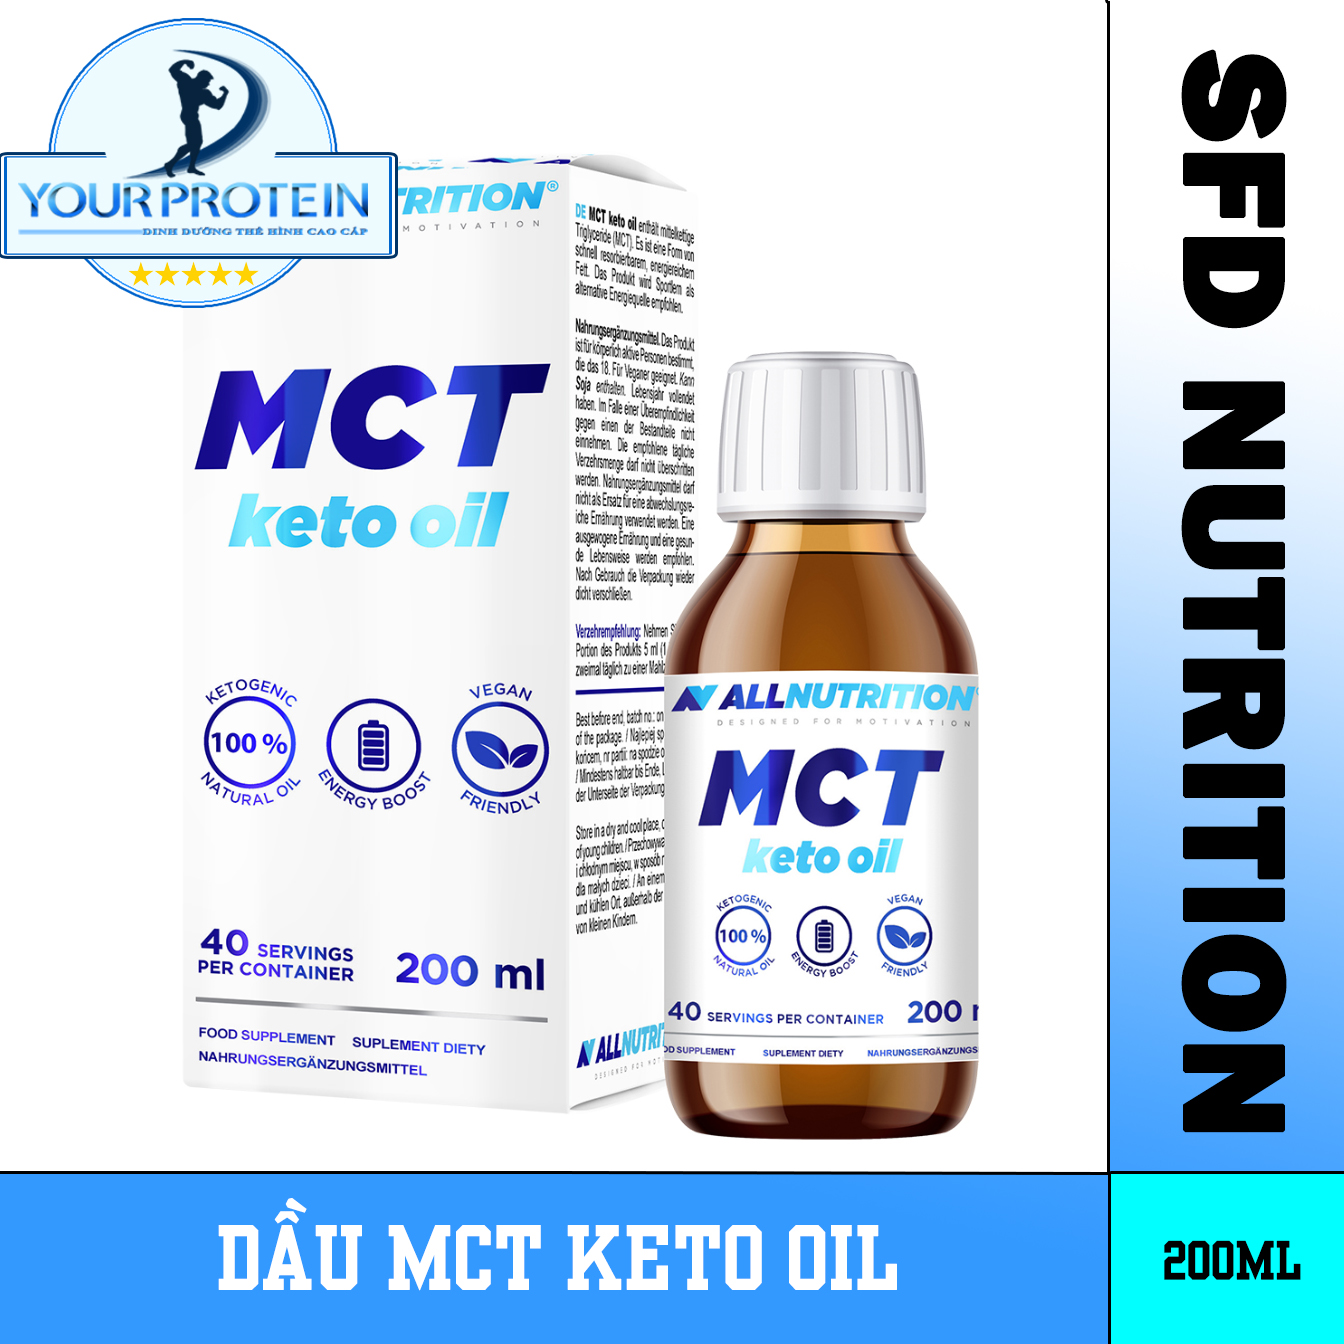 Allnutrition good fat dietary supplement oil support keto MCT keto oil diet